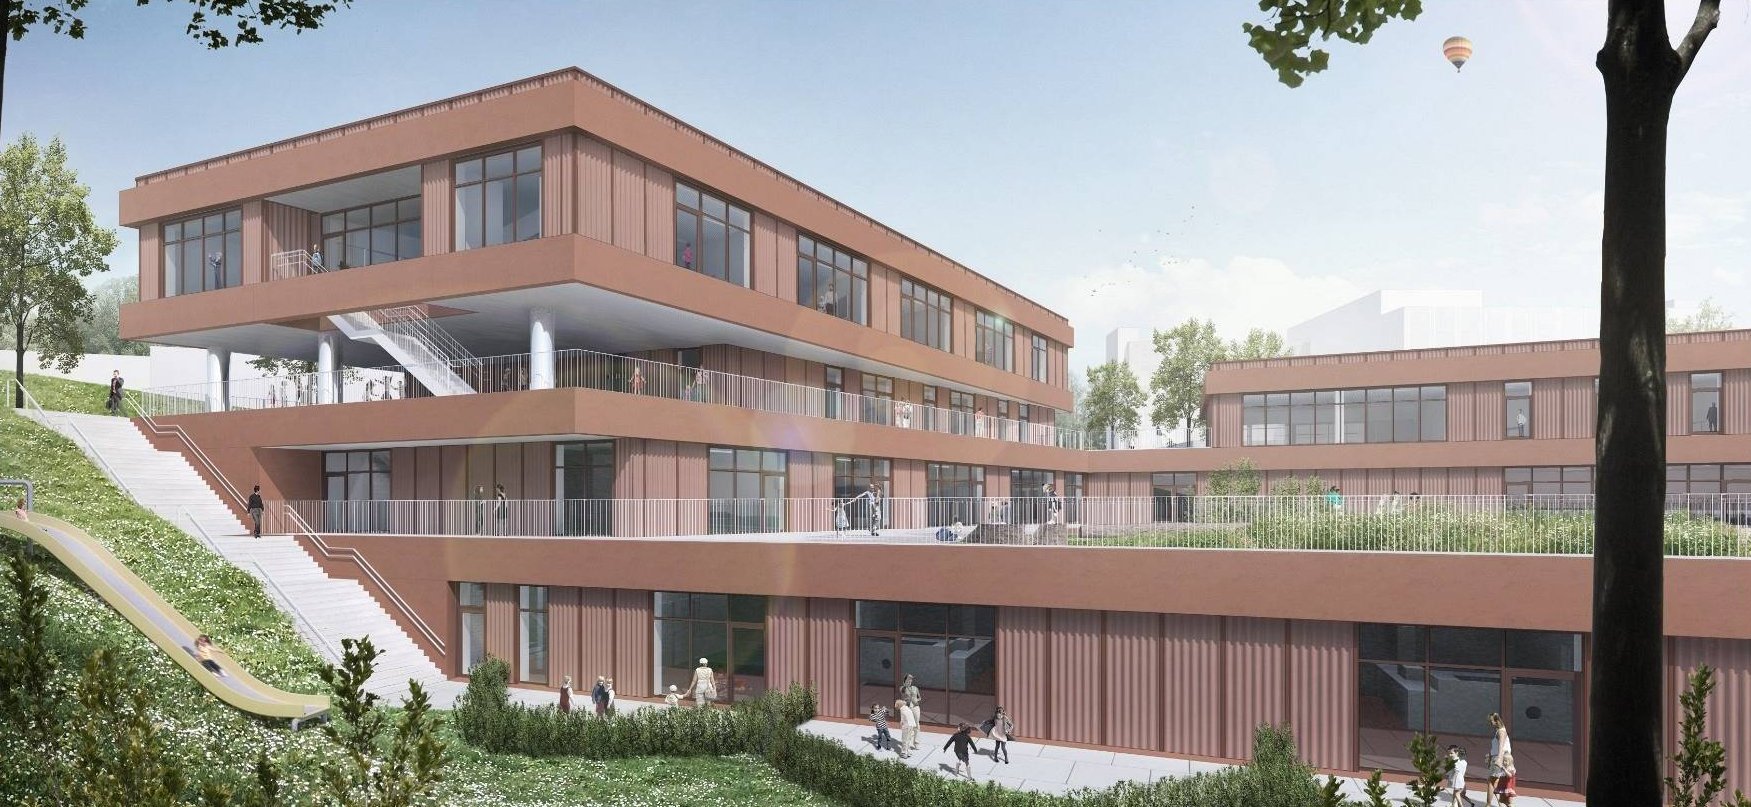 Campus pour enfants VUB Theodoortje cuypers & Q architects et cenergie